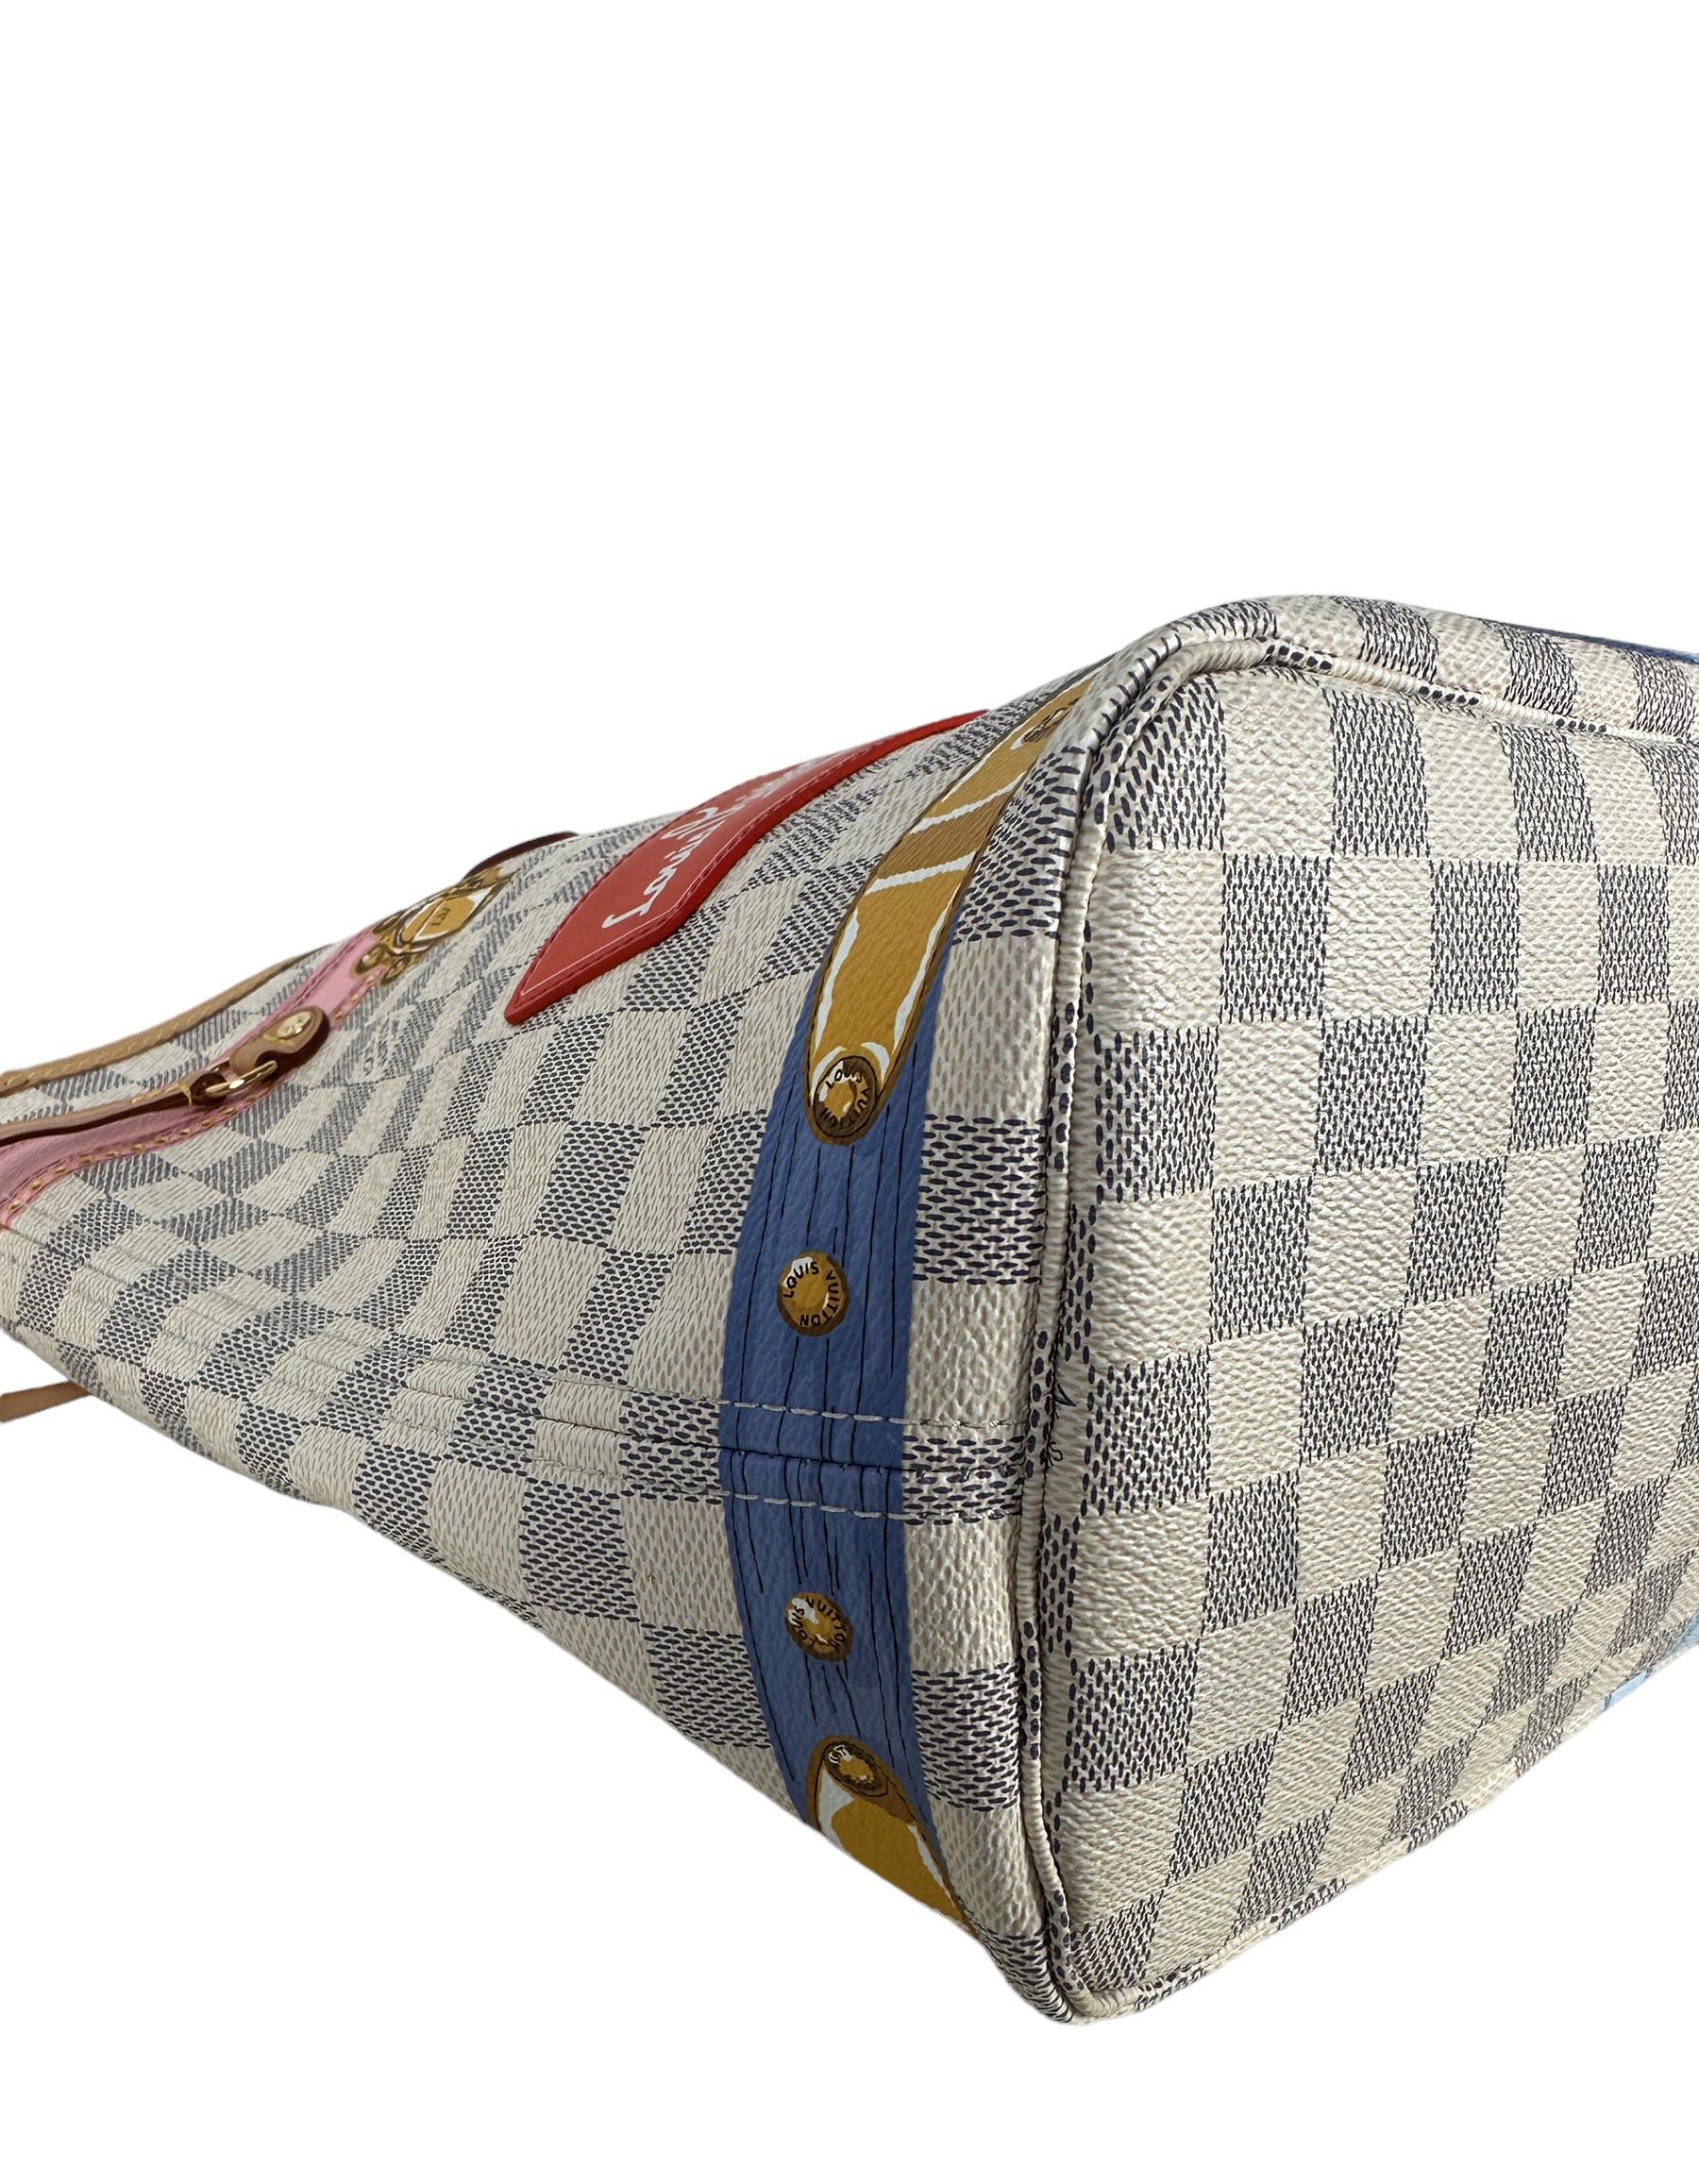 Louis Vuitton Damier Azur Summer Trunks Neverfull MM Tote Bag For Sale 1